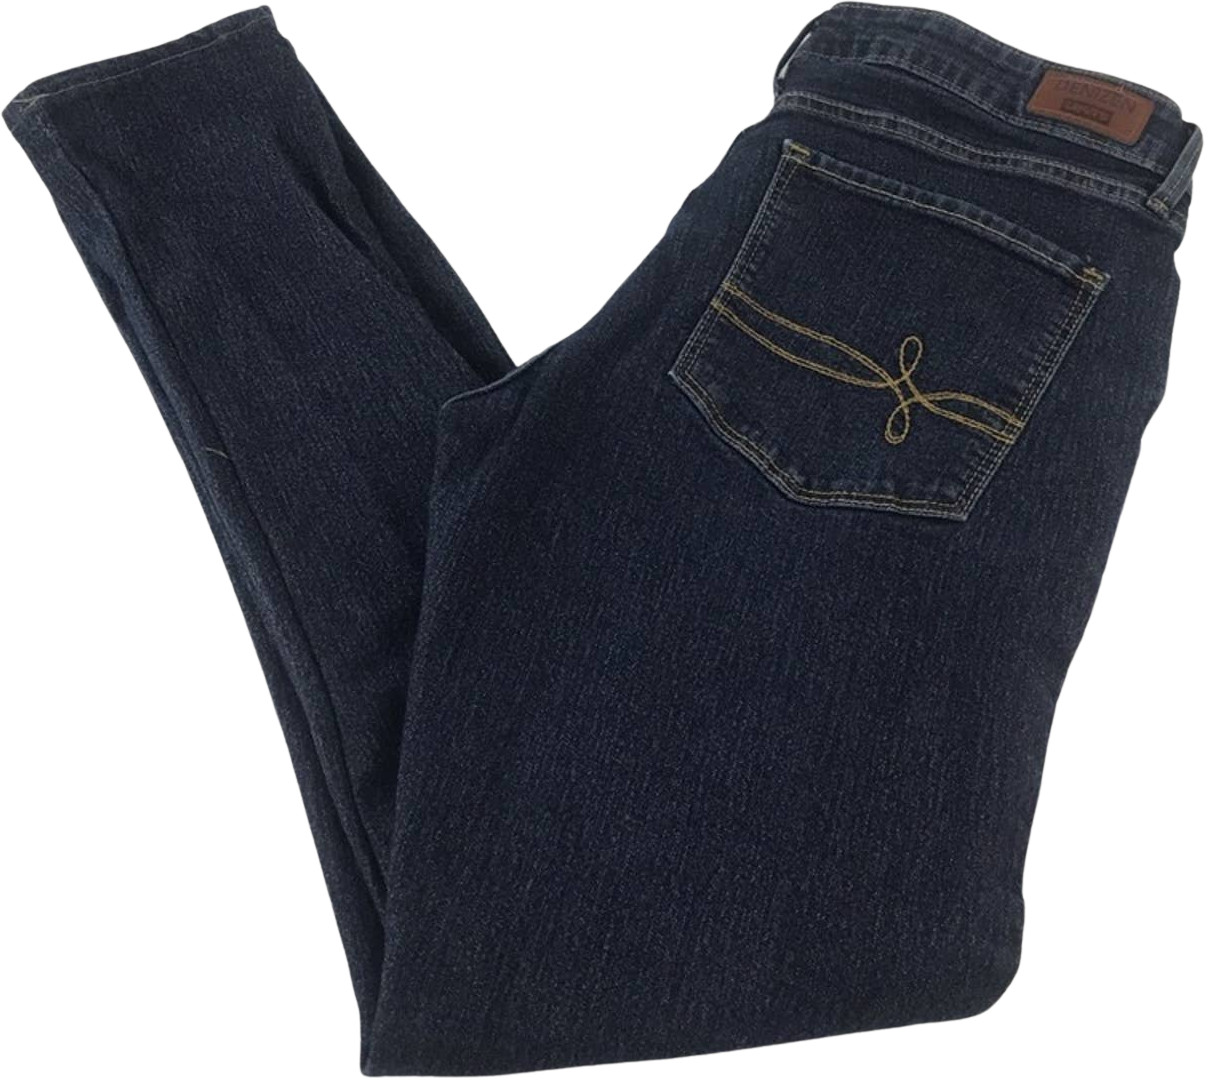 Vintage Denizen Levis Jeans by Denizen From Levi's | Shop THRILLING